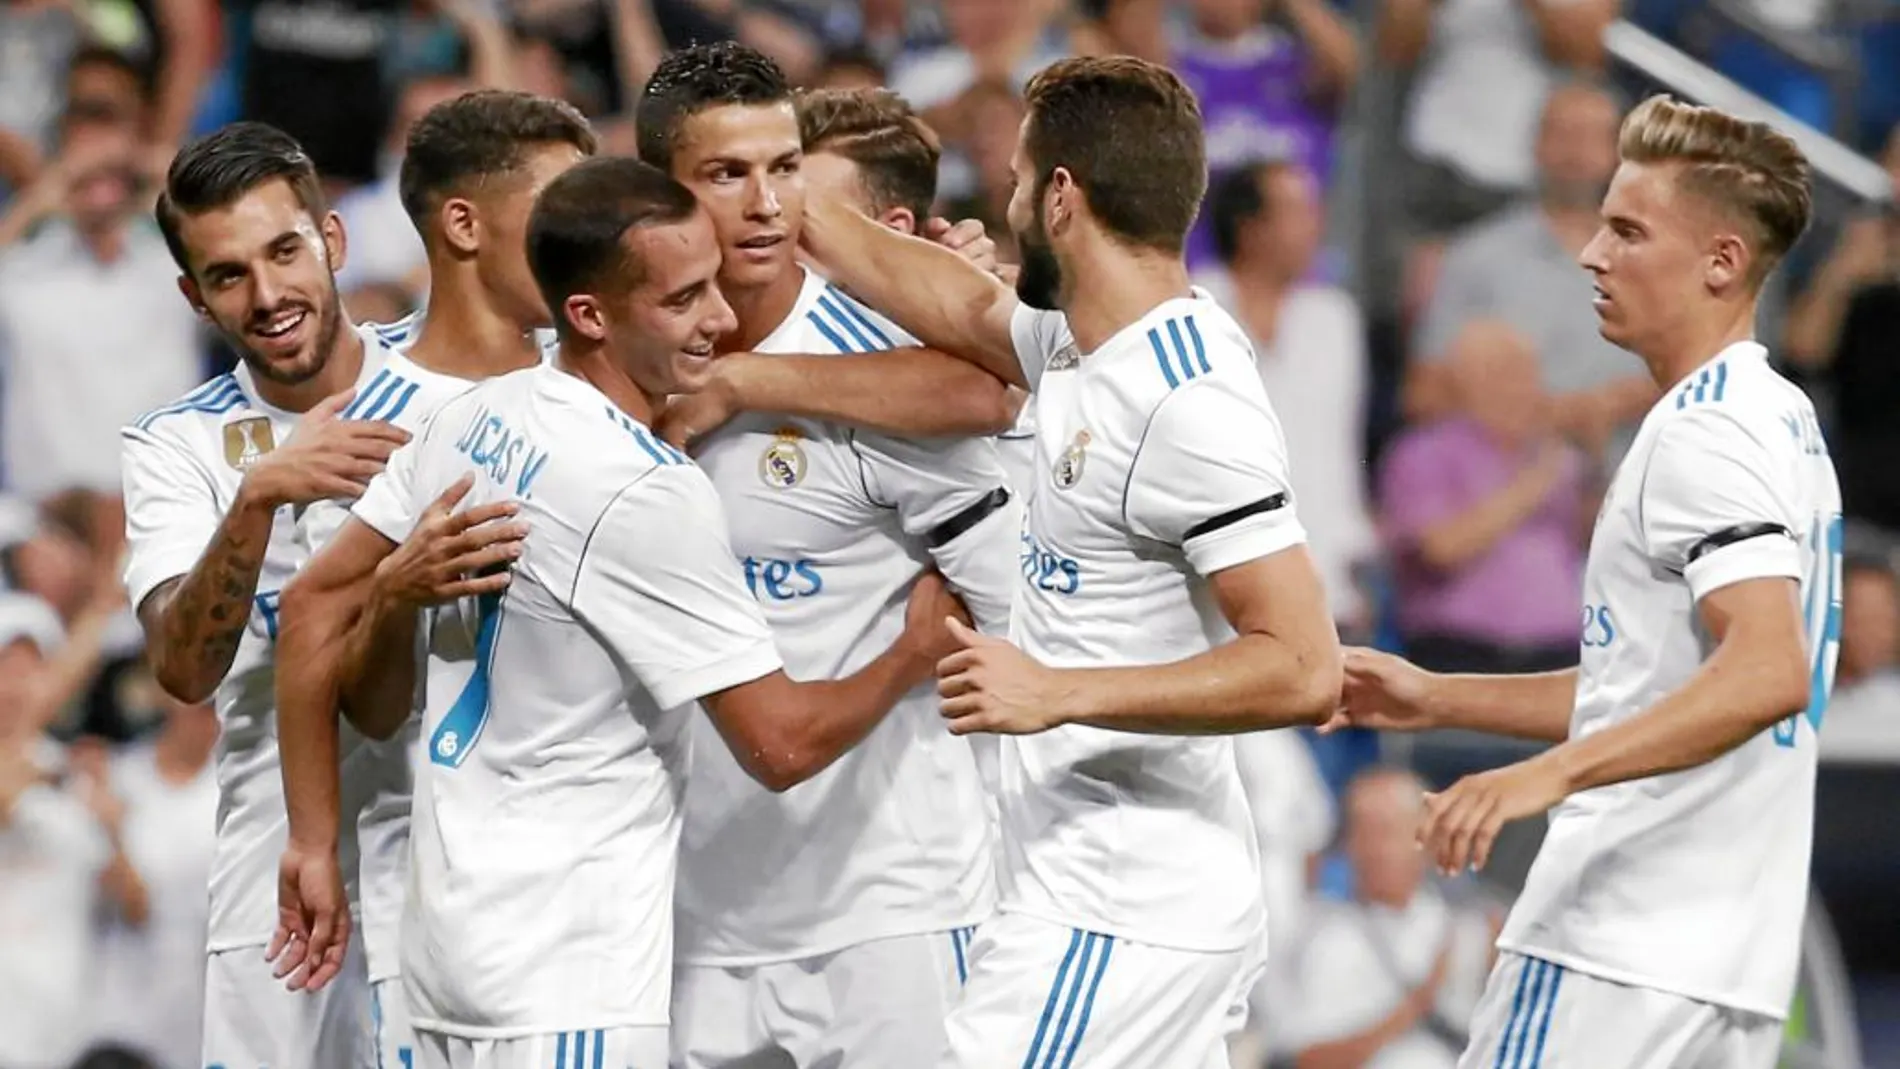 Los jugadores del Madrid abrazan a Cristiano tras su gol de anoche